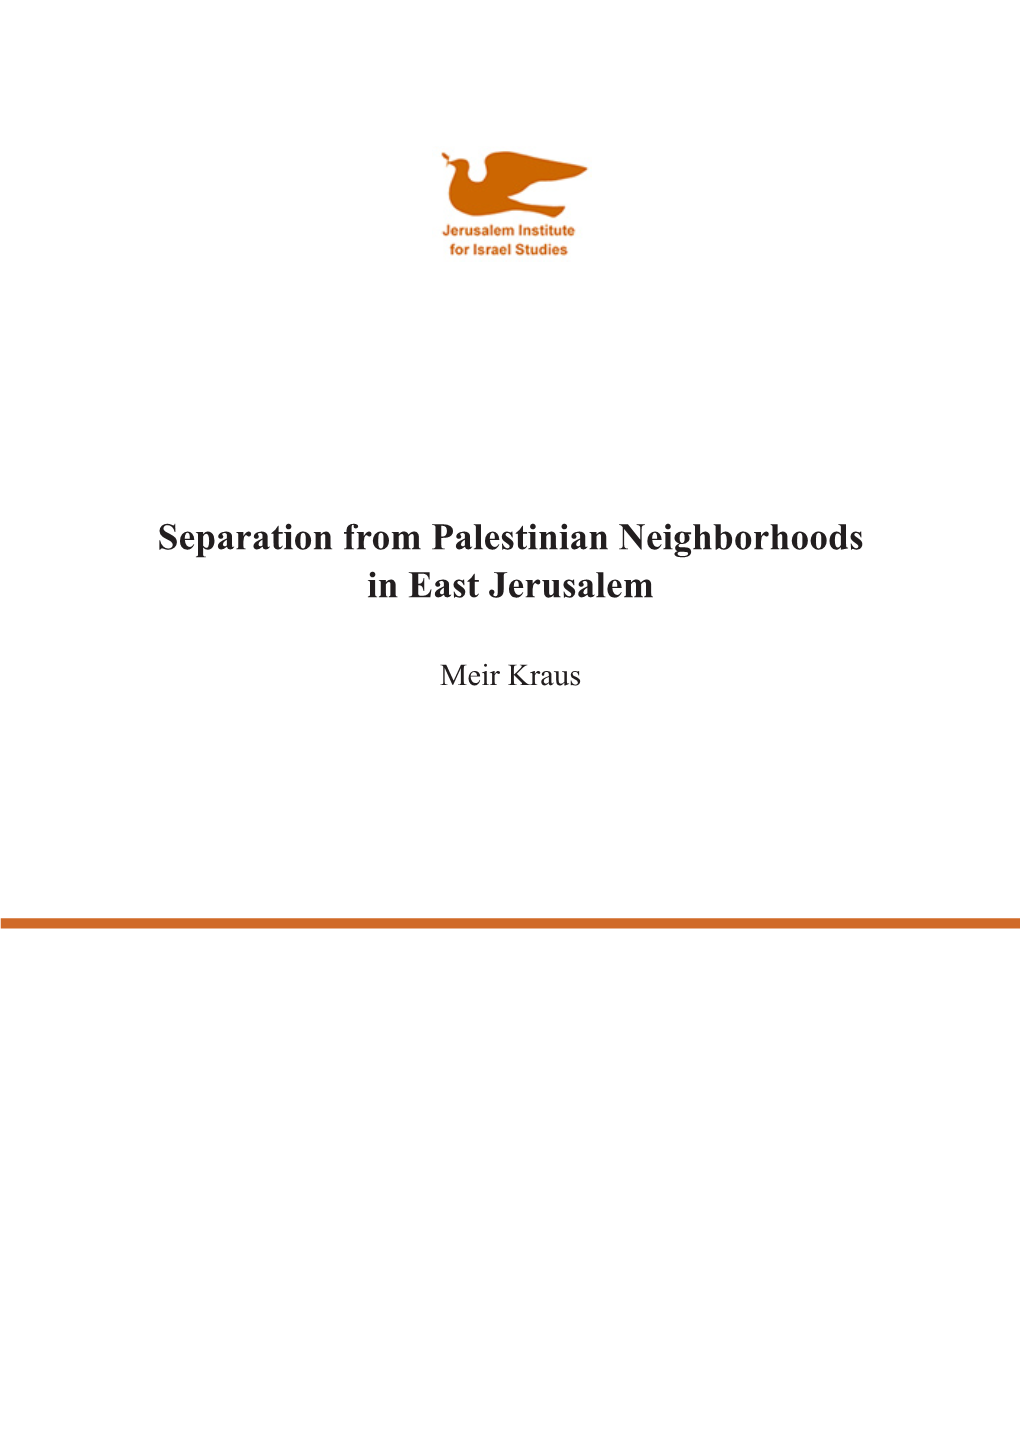 Separation from Palestinian Neighborhoods in East Jerusalem